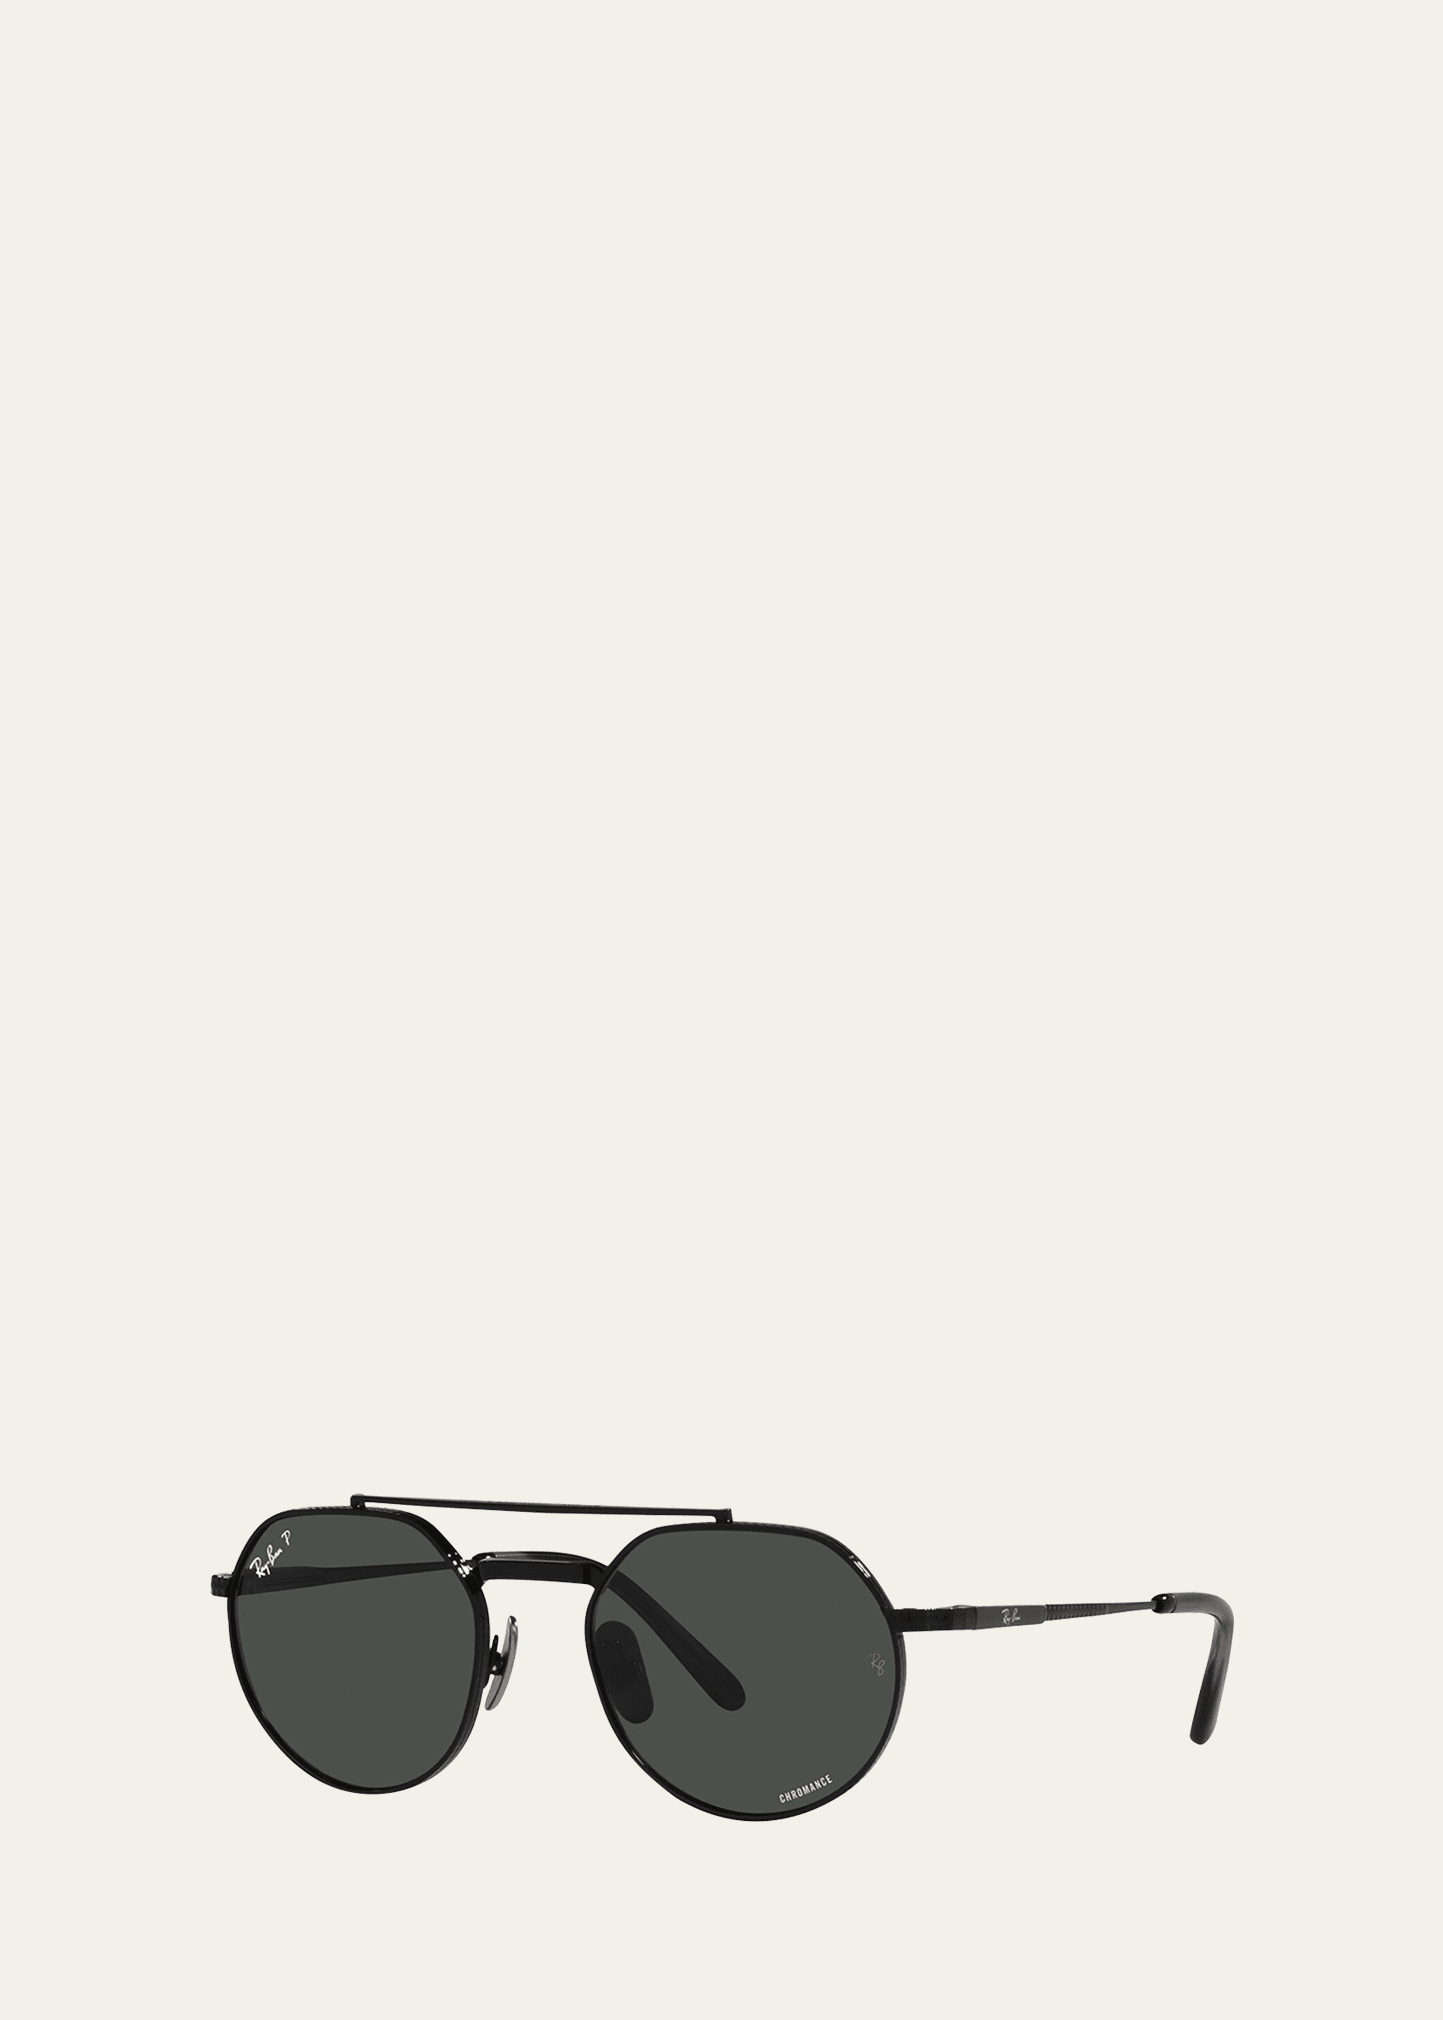 Ray Ban Round Ii Titanium Sunglasses Black Frame Grey Lenses Polarized 53-20